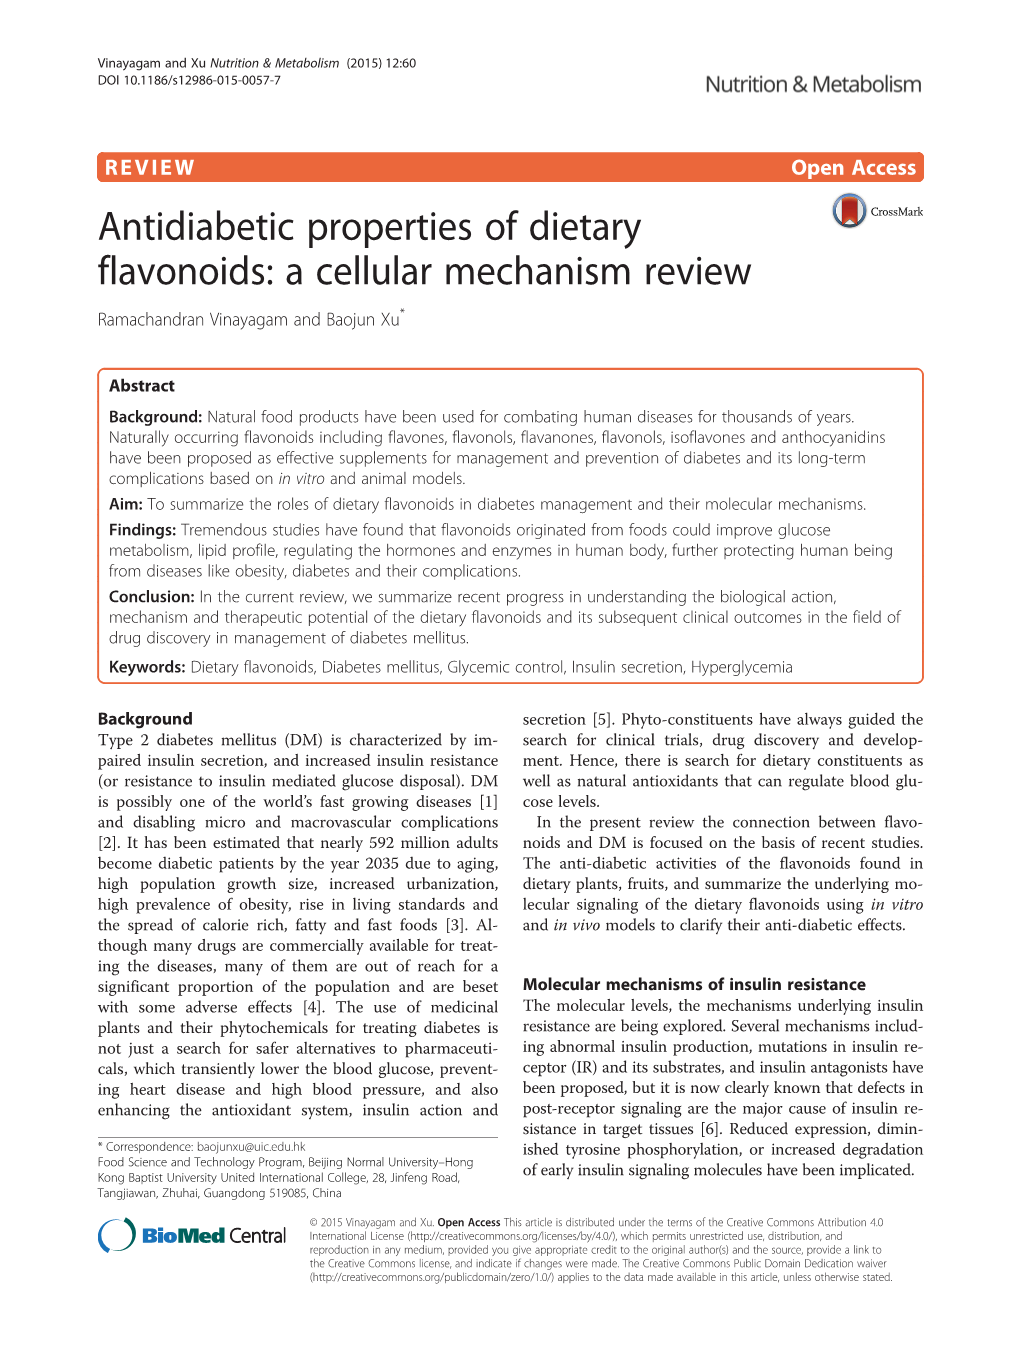 Antidiabetic Properties of Dietary Flavonoids: a Cellular Mechanism Review Ramachandran Vinayagam and Baojun Xu*